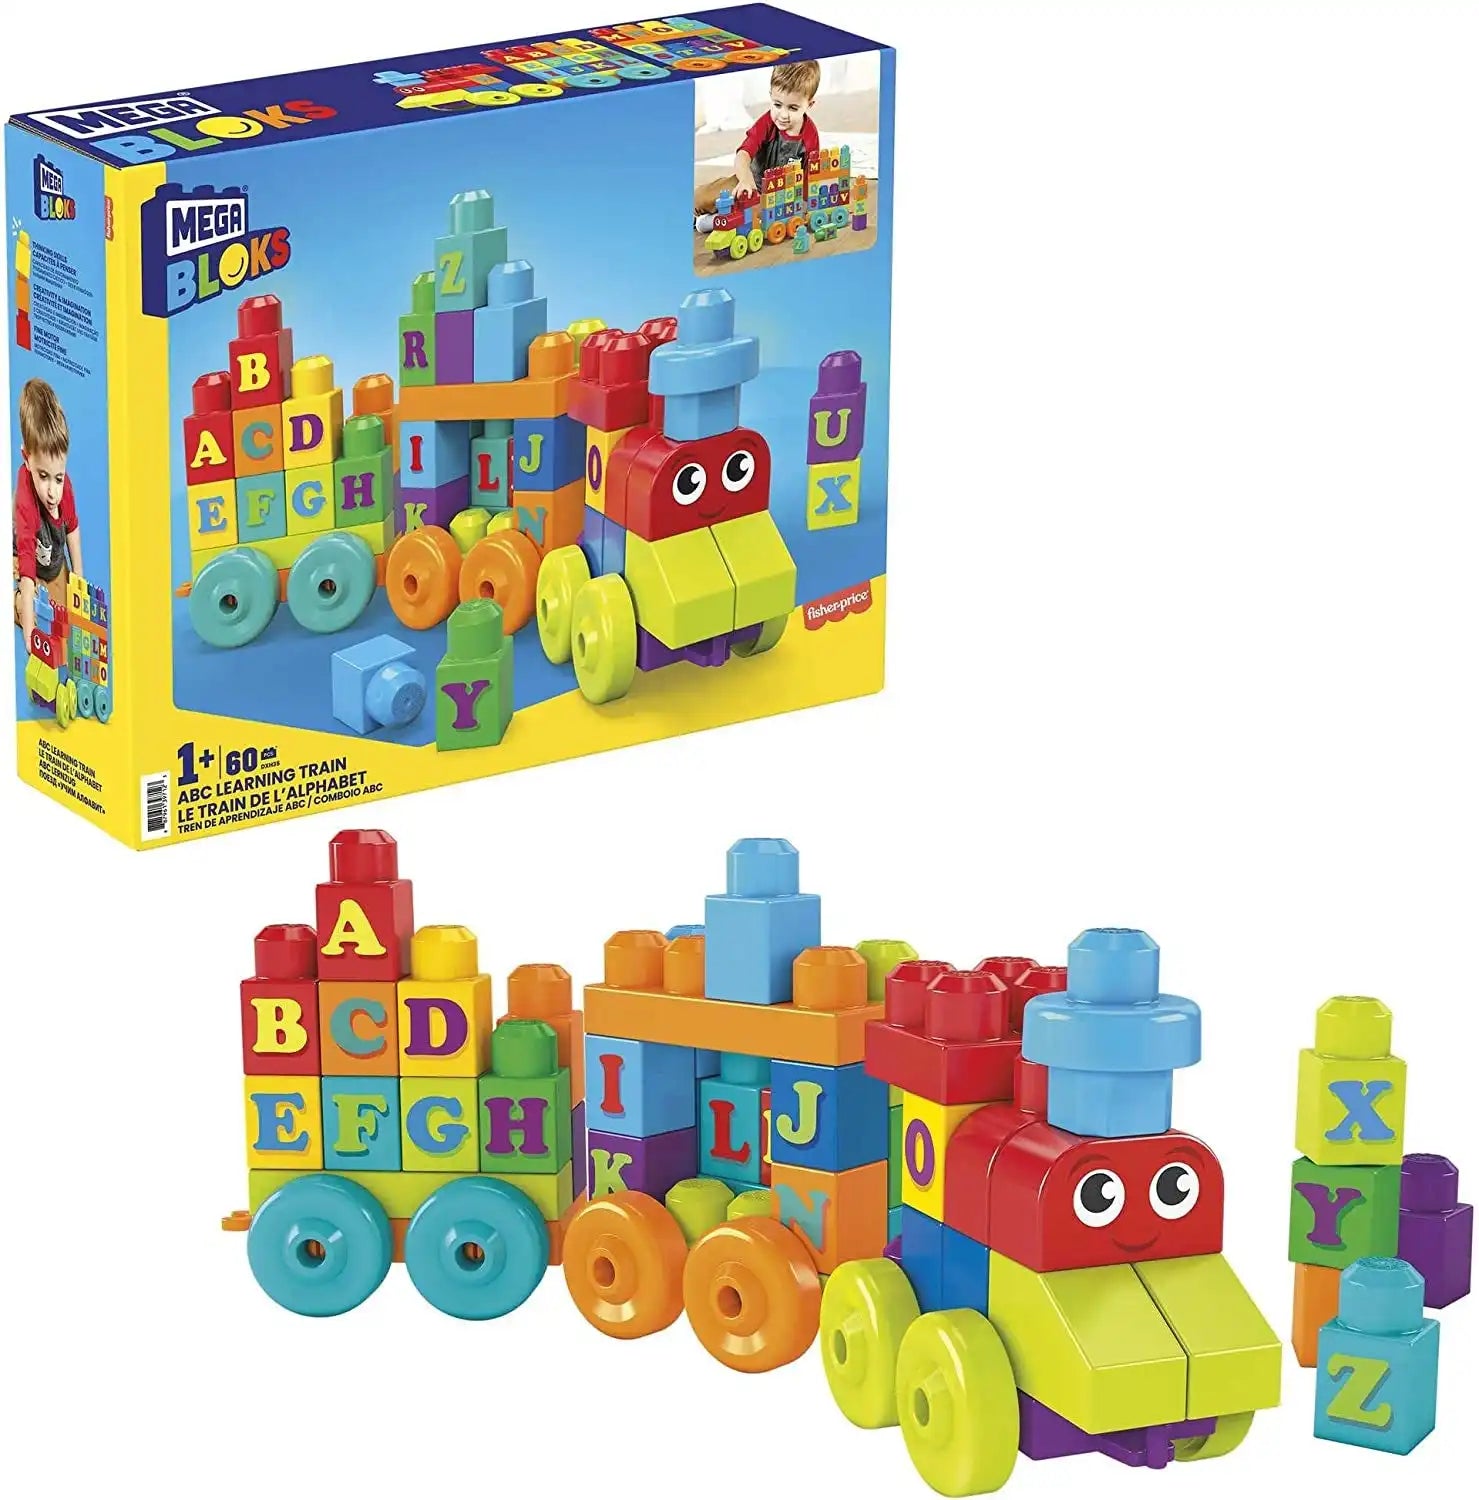 ABC Blocks Building Toy